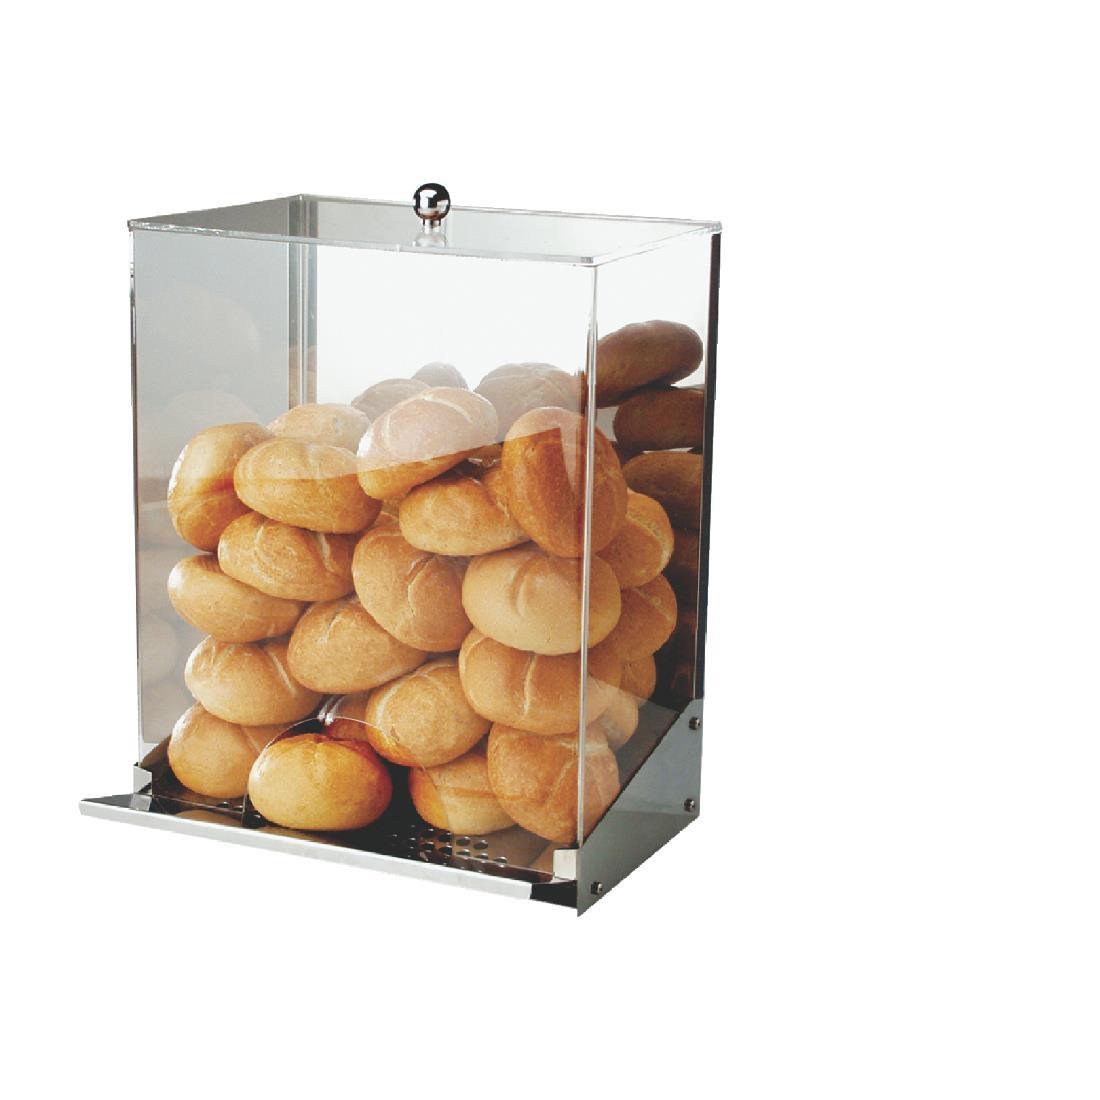 Bread Roll Dispenser - CC557  - 1